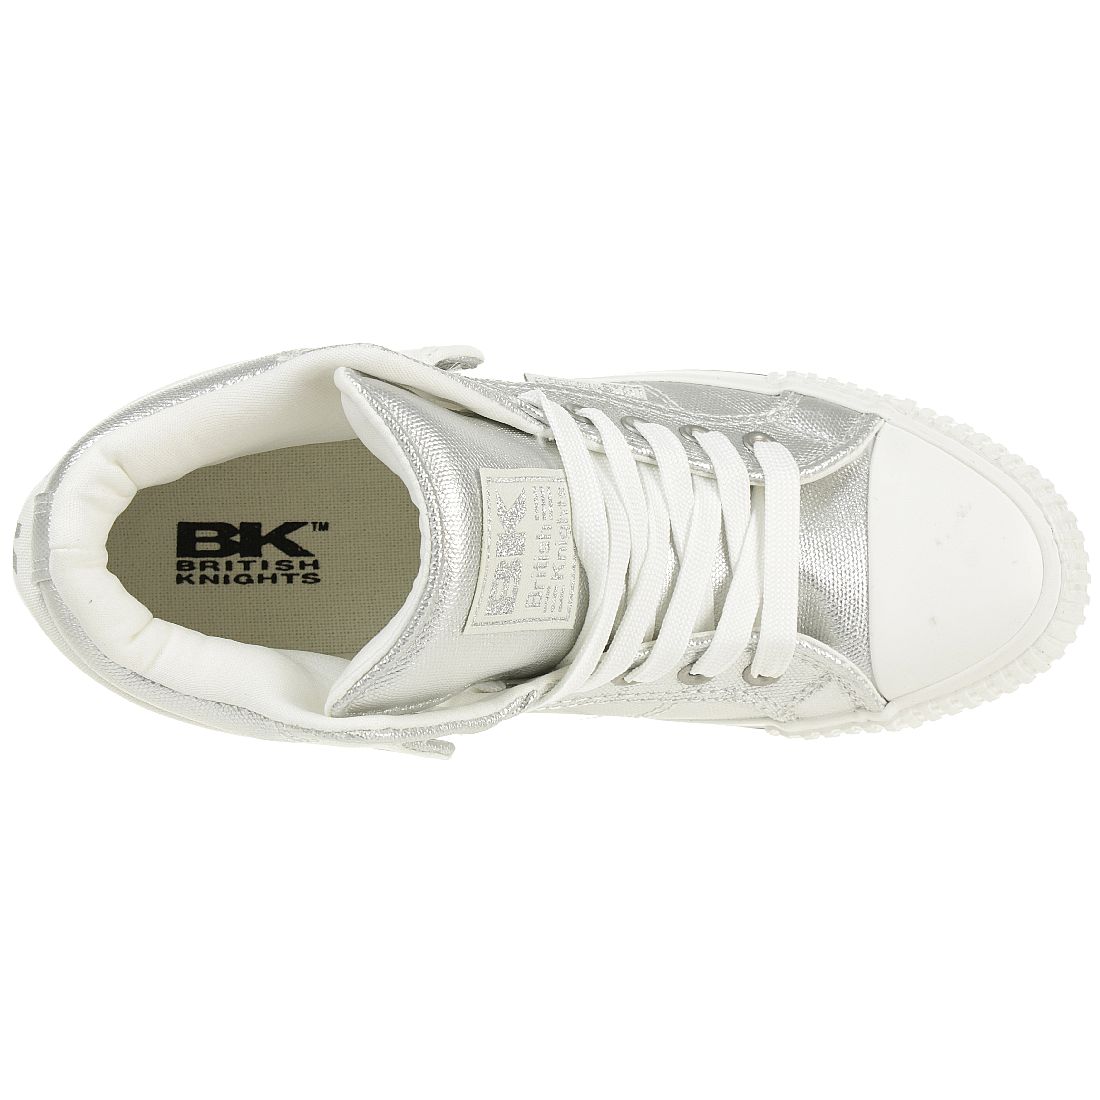 British Knights ROCO Metallic BK Damen Sneaker B43-3706-01 silber metallic Textil